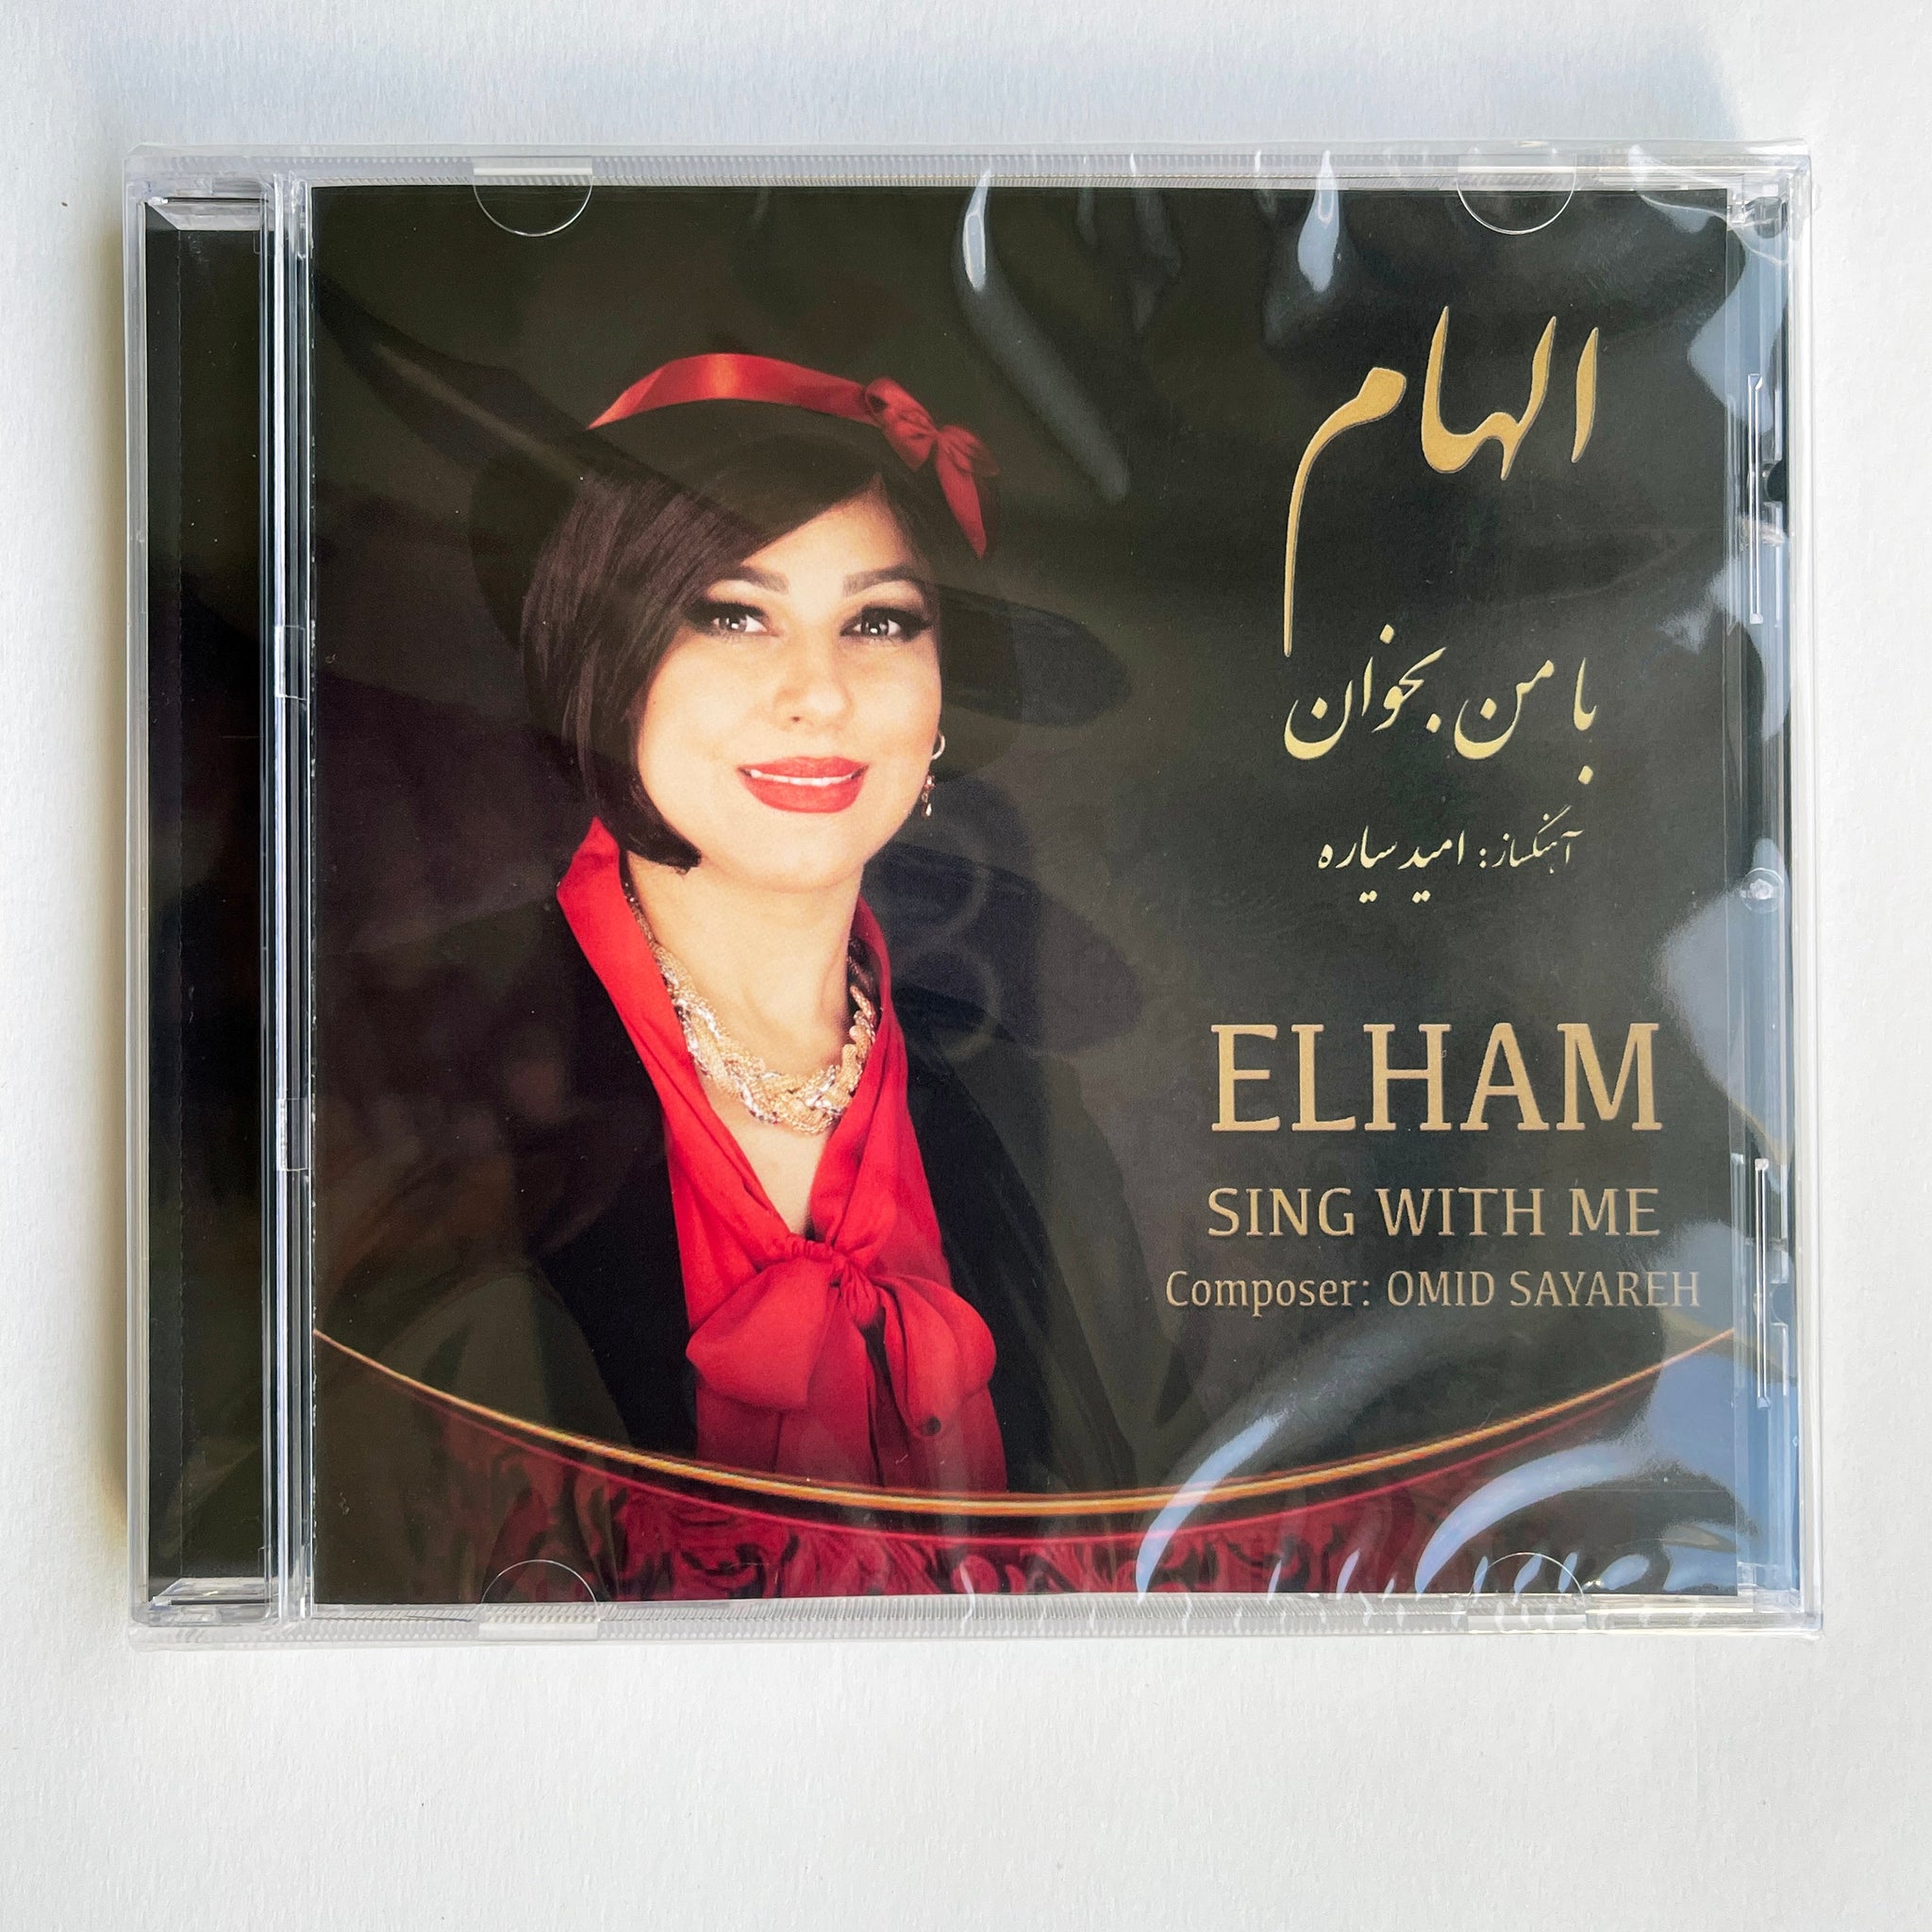 Ba Man Bekhan - Persian Pop Music CD - Singer: Elham - Farsi Language